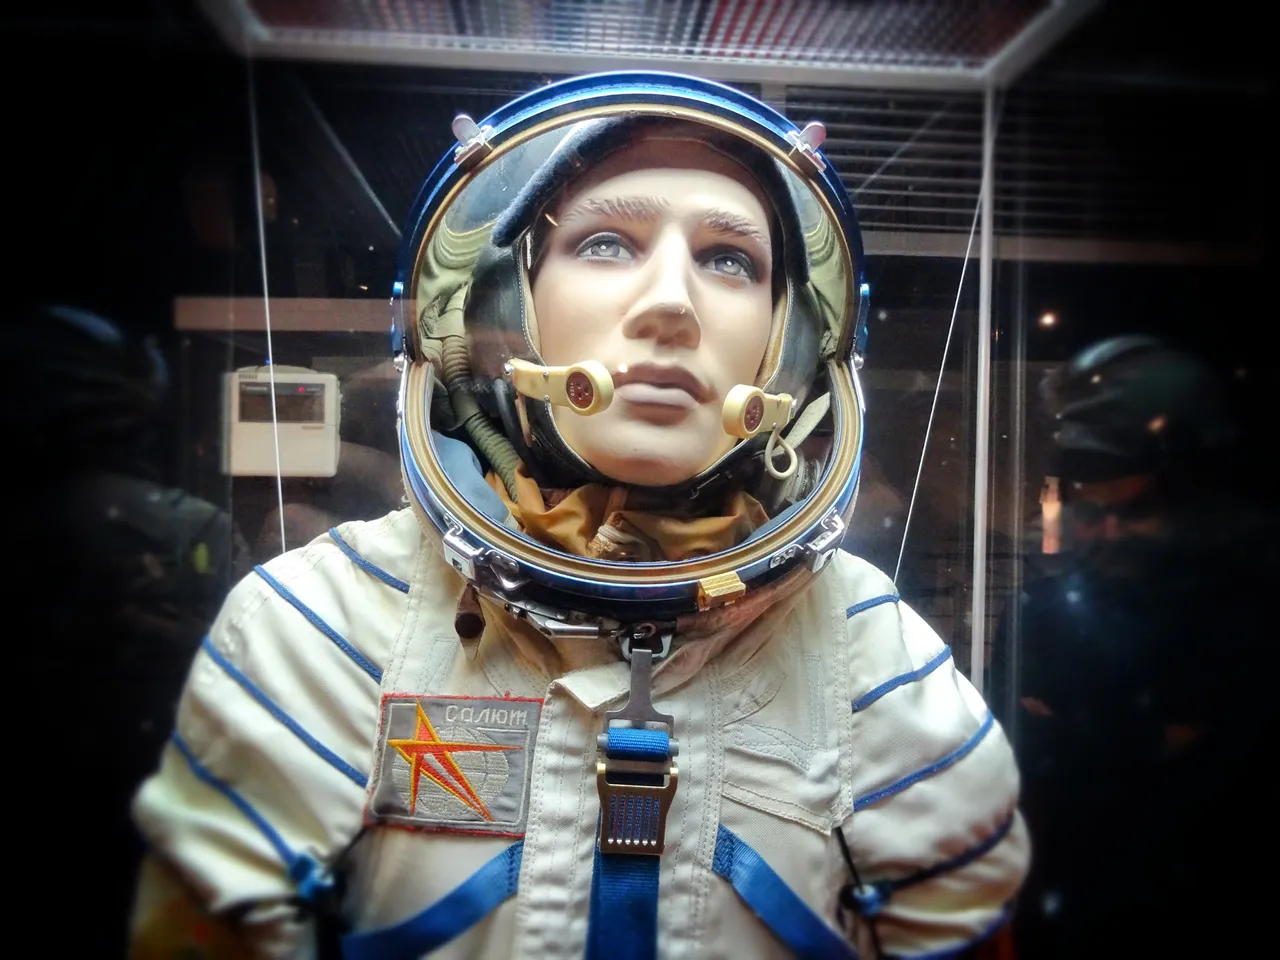 An russian astronaut, called ”Kosmonaut”